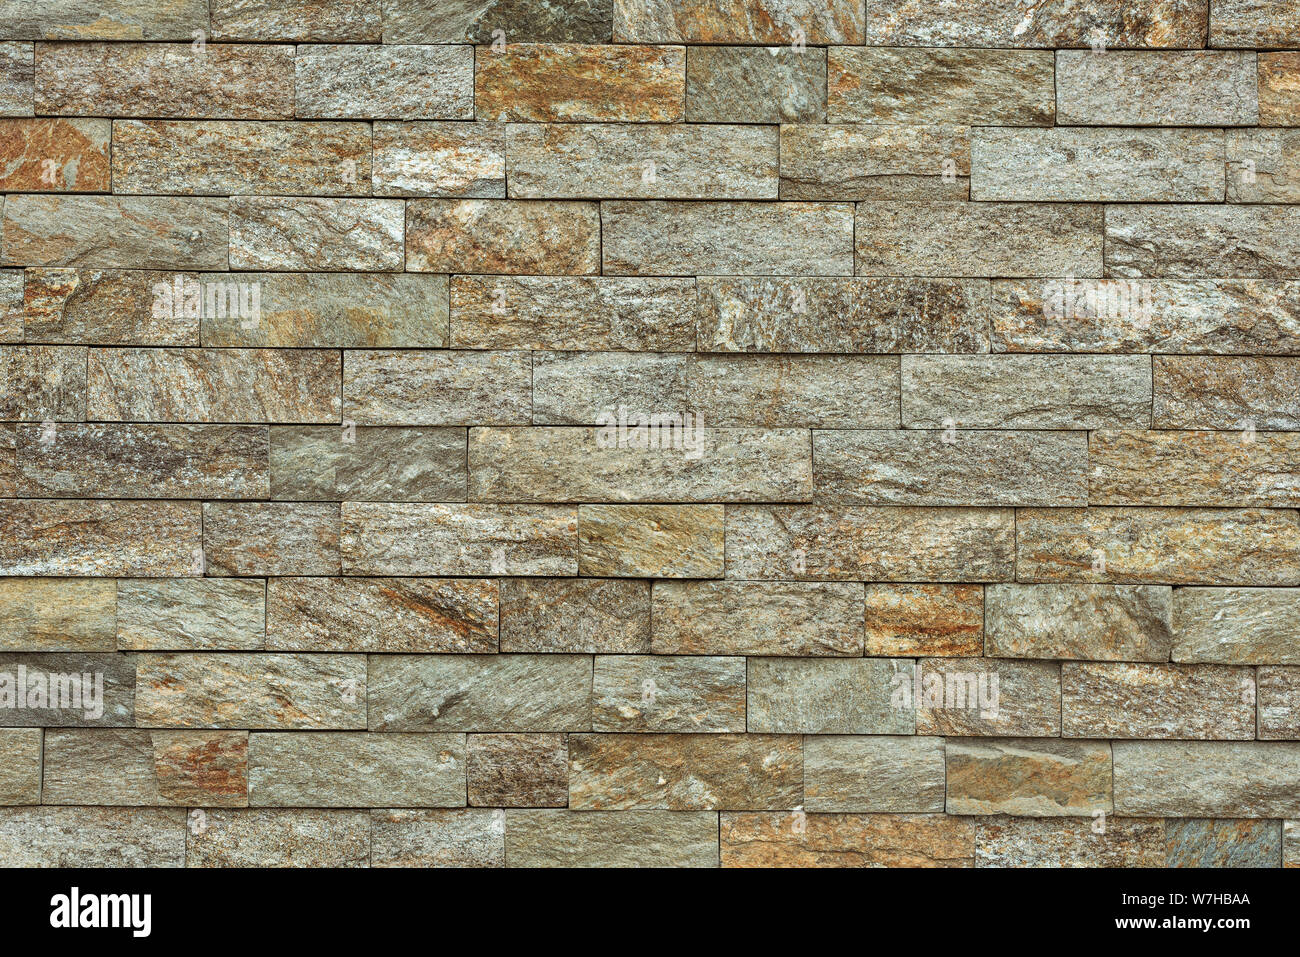 Stone brick tile as background, modern italian style wall made of tiled stone blocks Stock Photo